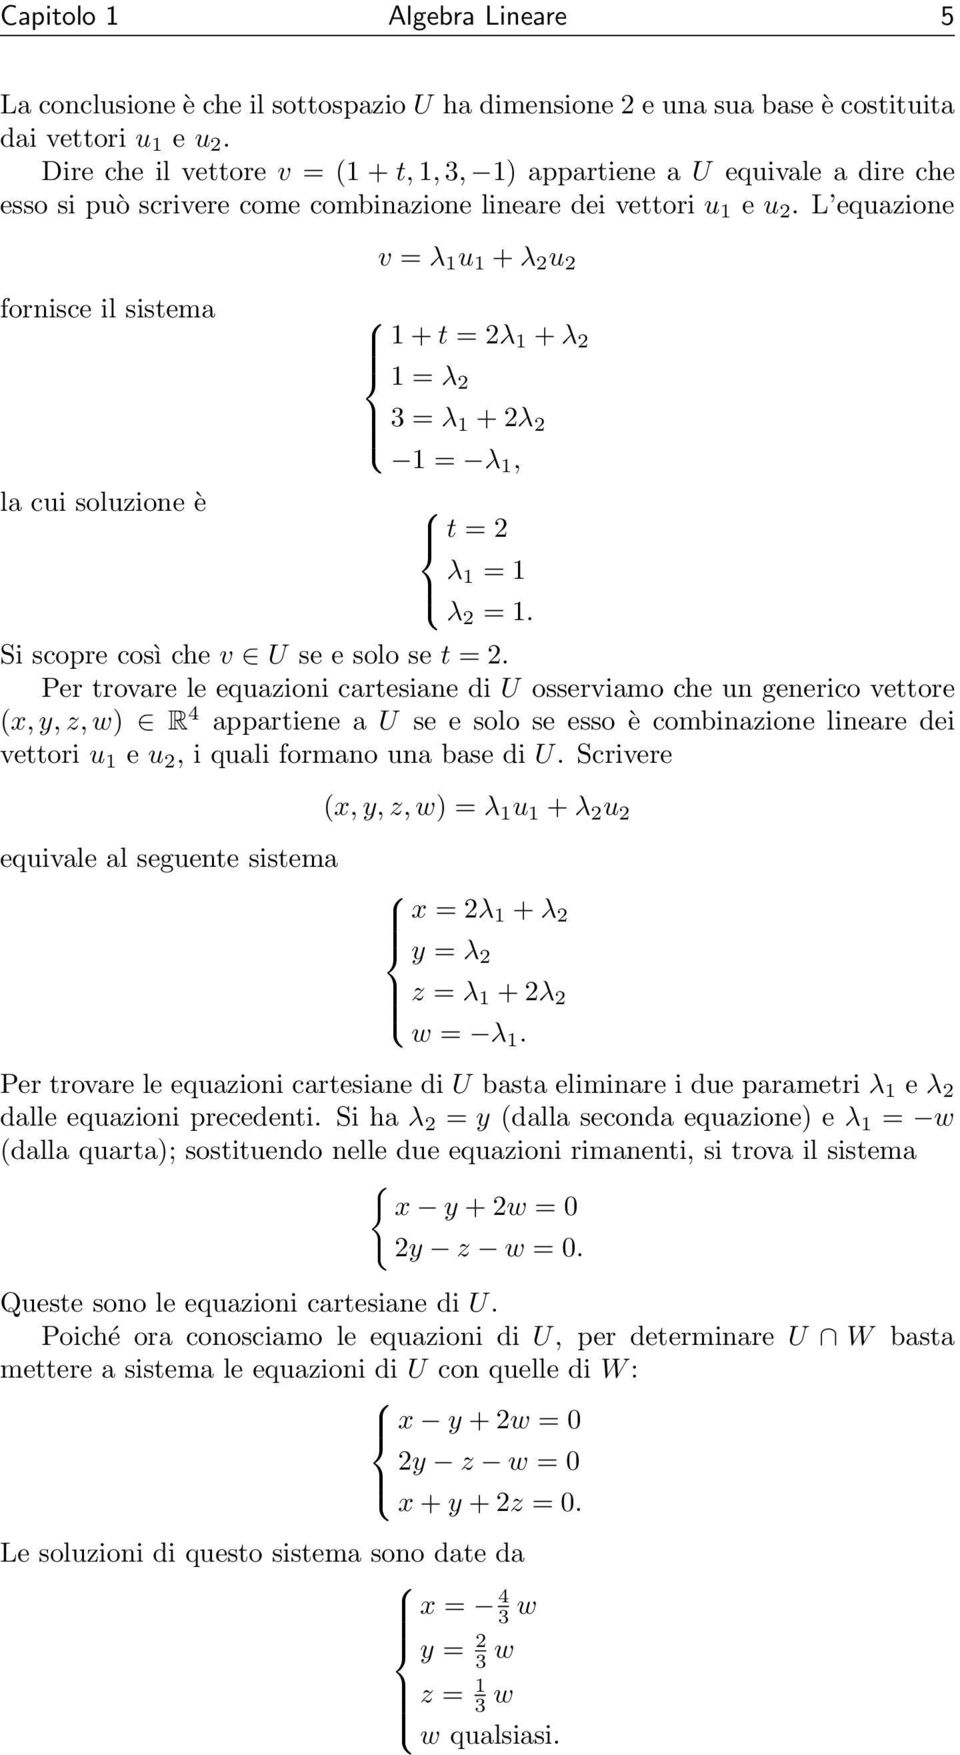 L equazione v = λ 1 u 1 + λ 2 u 2 fornisce il sistema 1 + t = 2λ 1 + λ 2 la cui soluzione è 1 = λ 2 3 = λ 1 + 2λ 2 1 = λ 1, t = 2 λ 1 = 1 λ 2 = 1. Si scopre così che v U se e solo se t = 2.